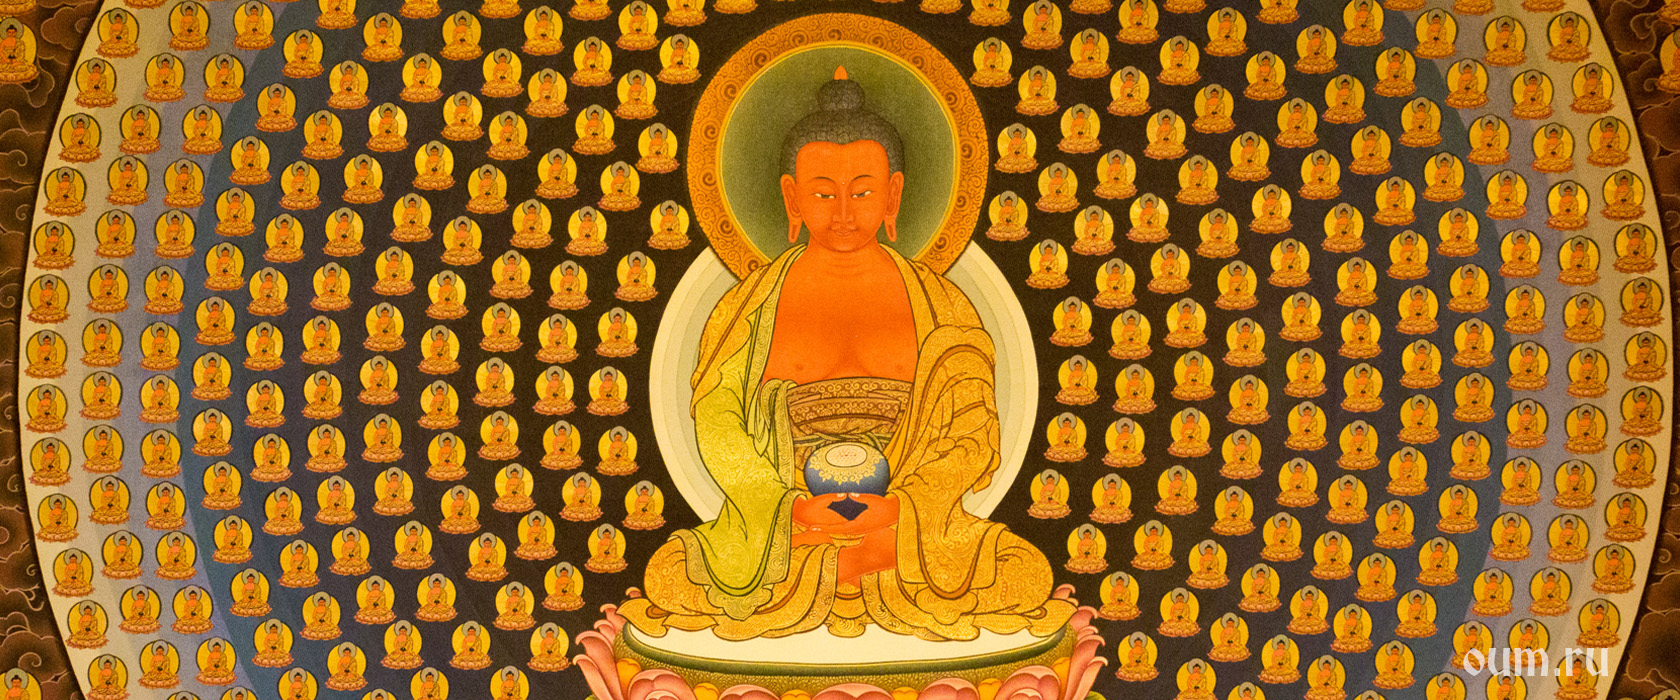 Реферат: Budism